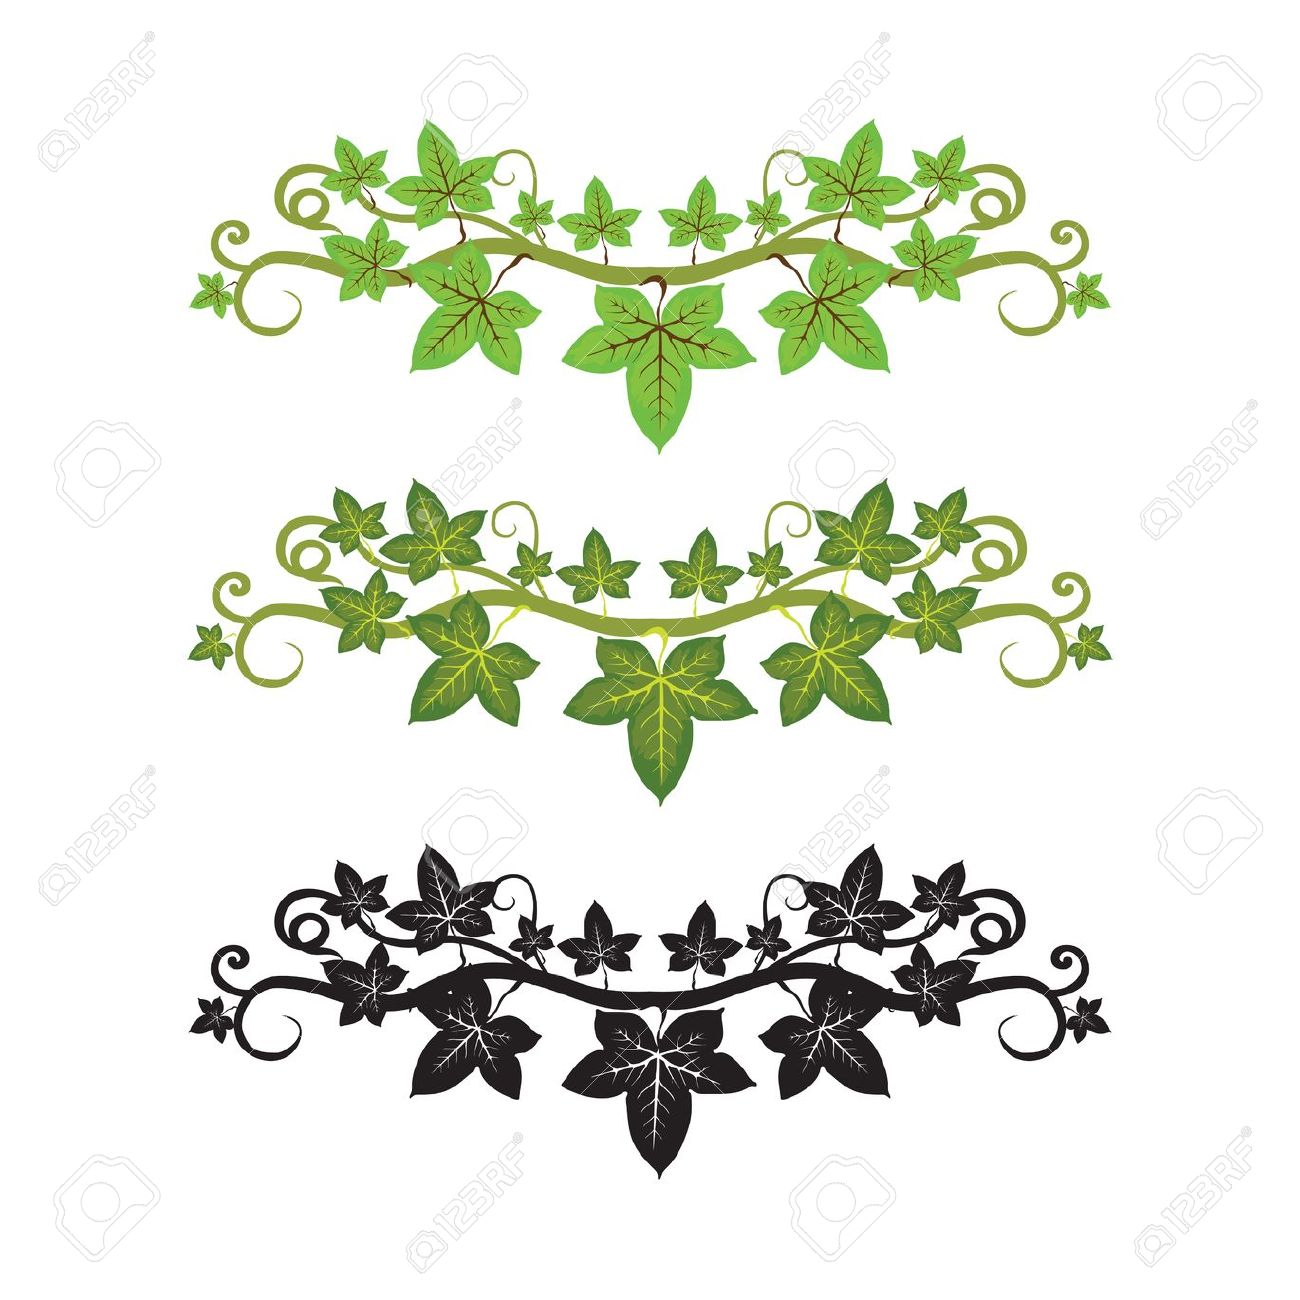 leaf motif clip art - photo #40